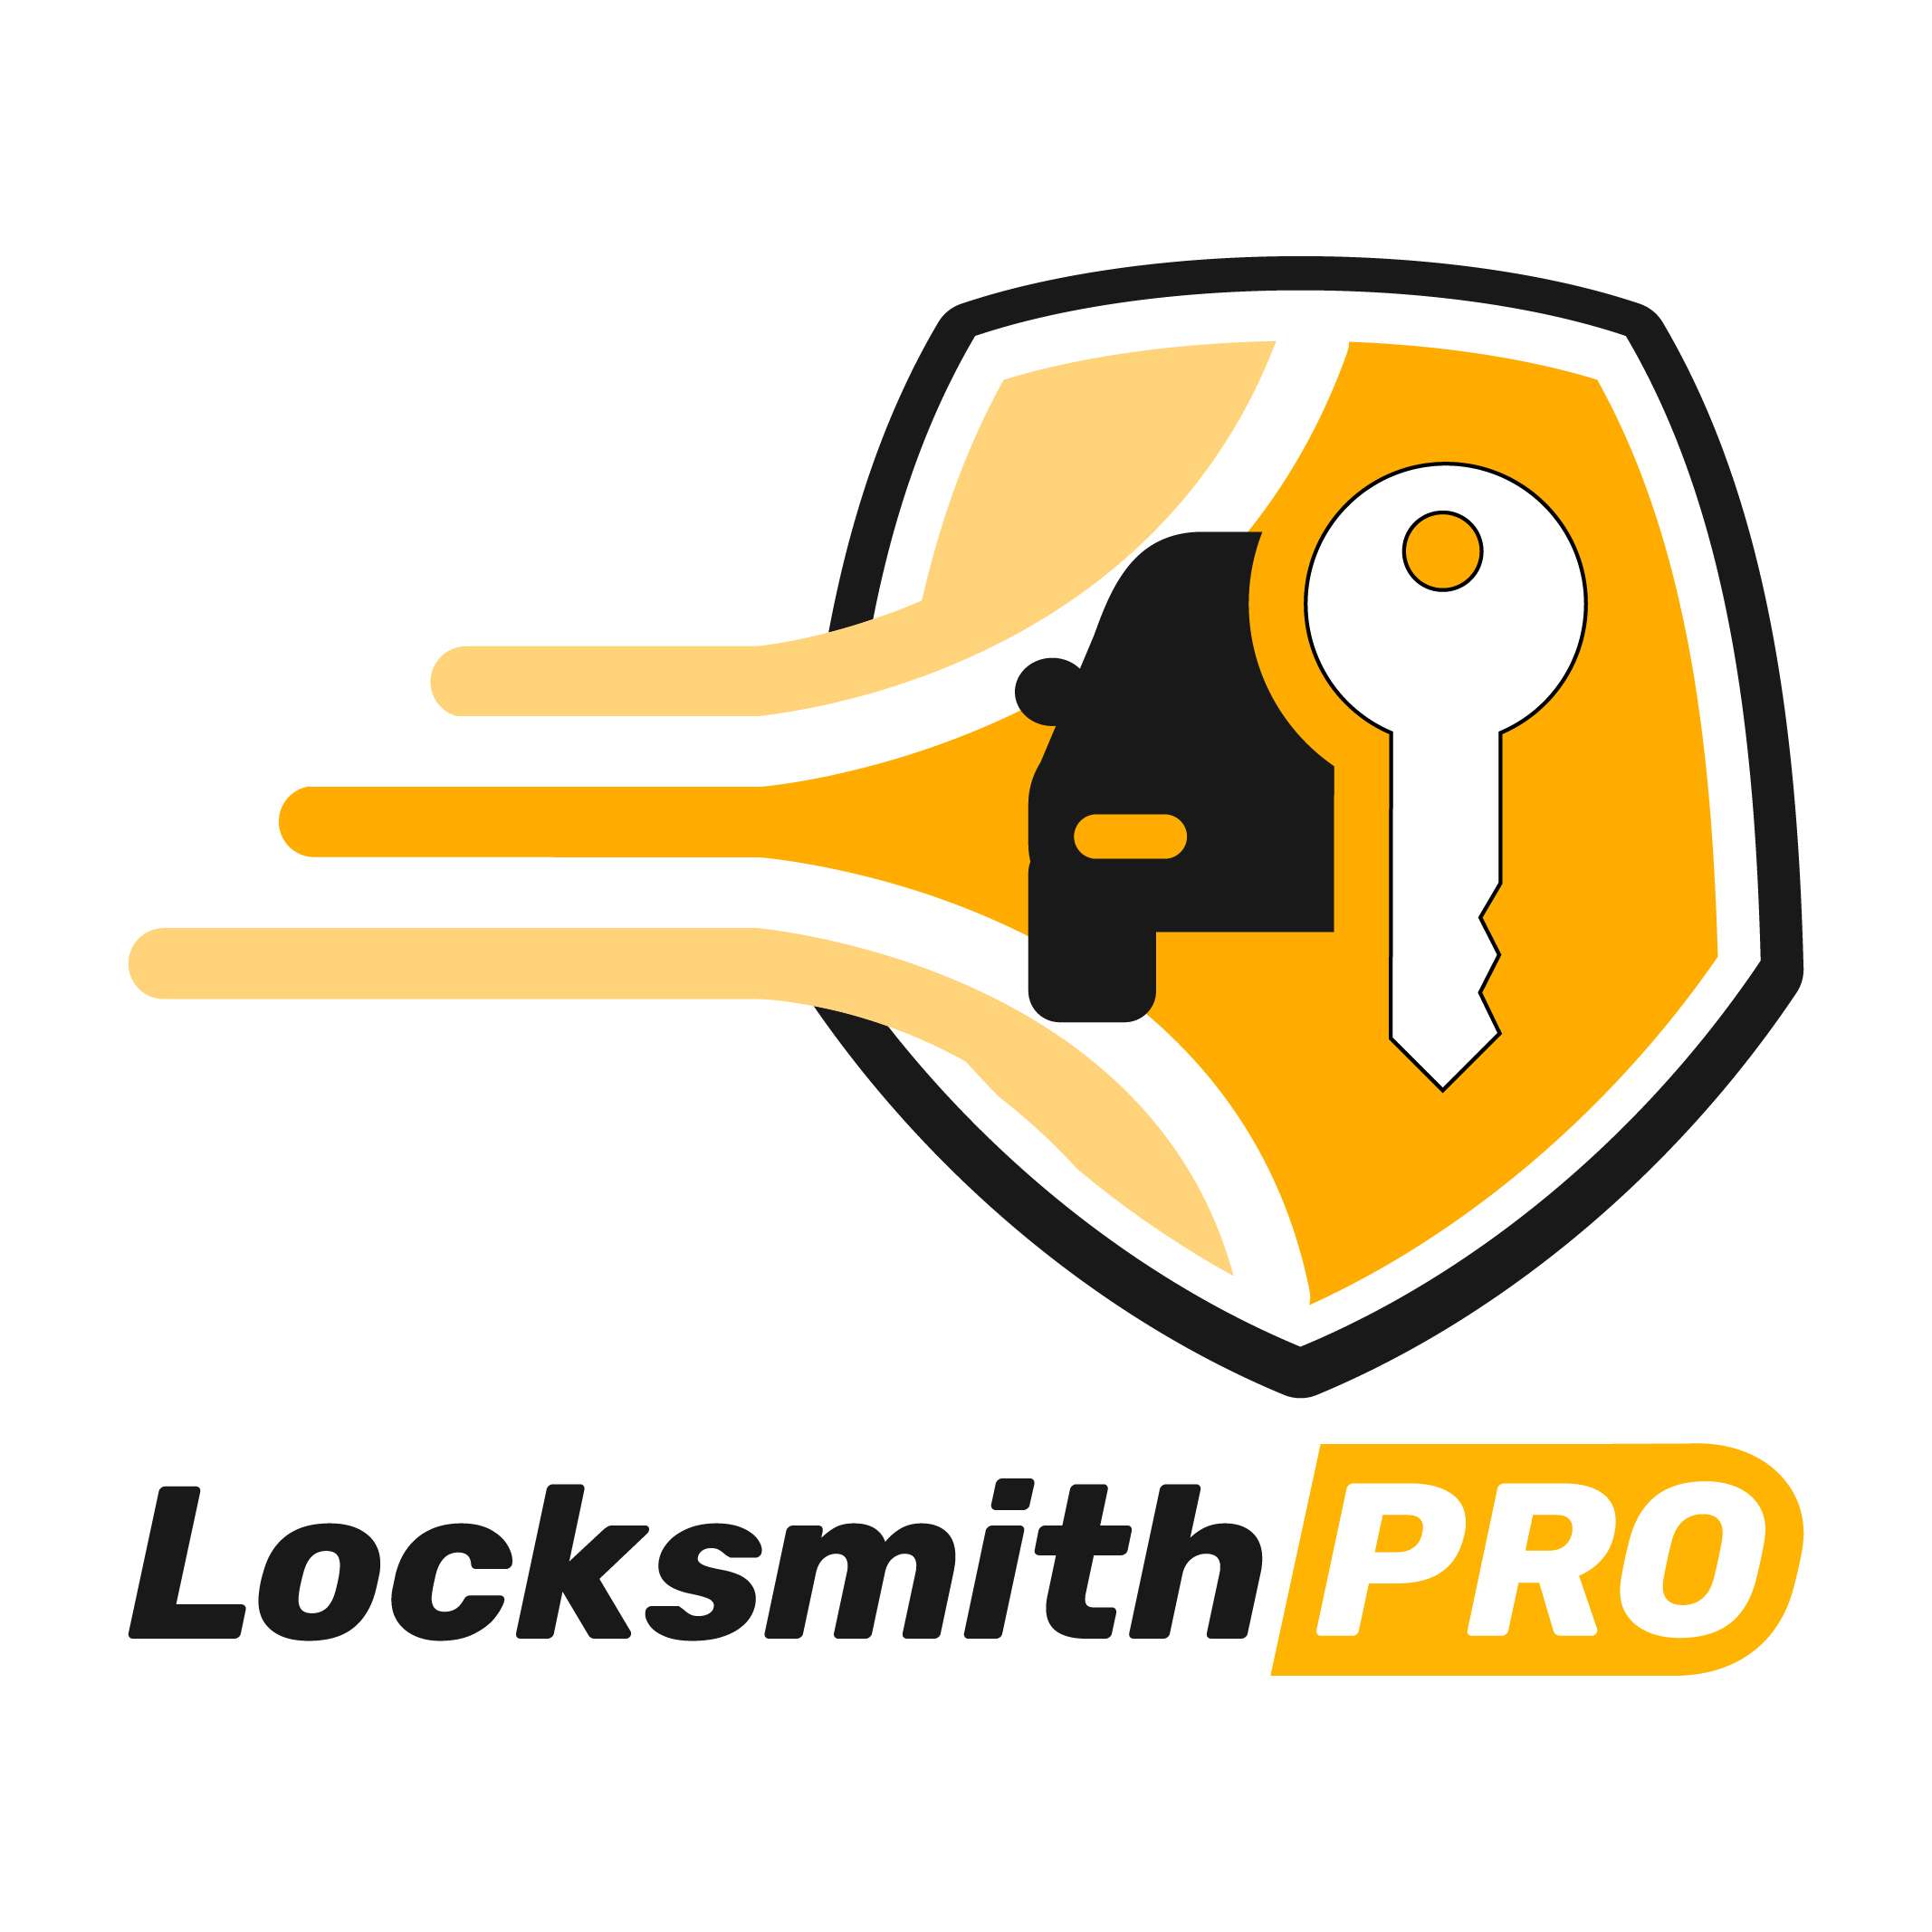 Locksmith Pro LLC logo